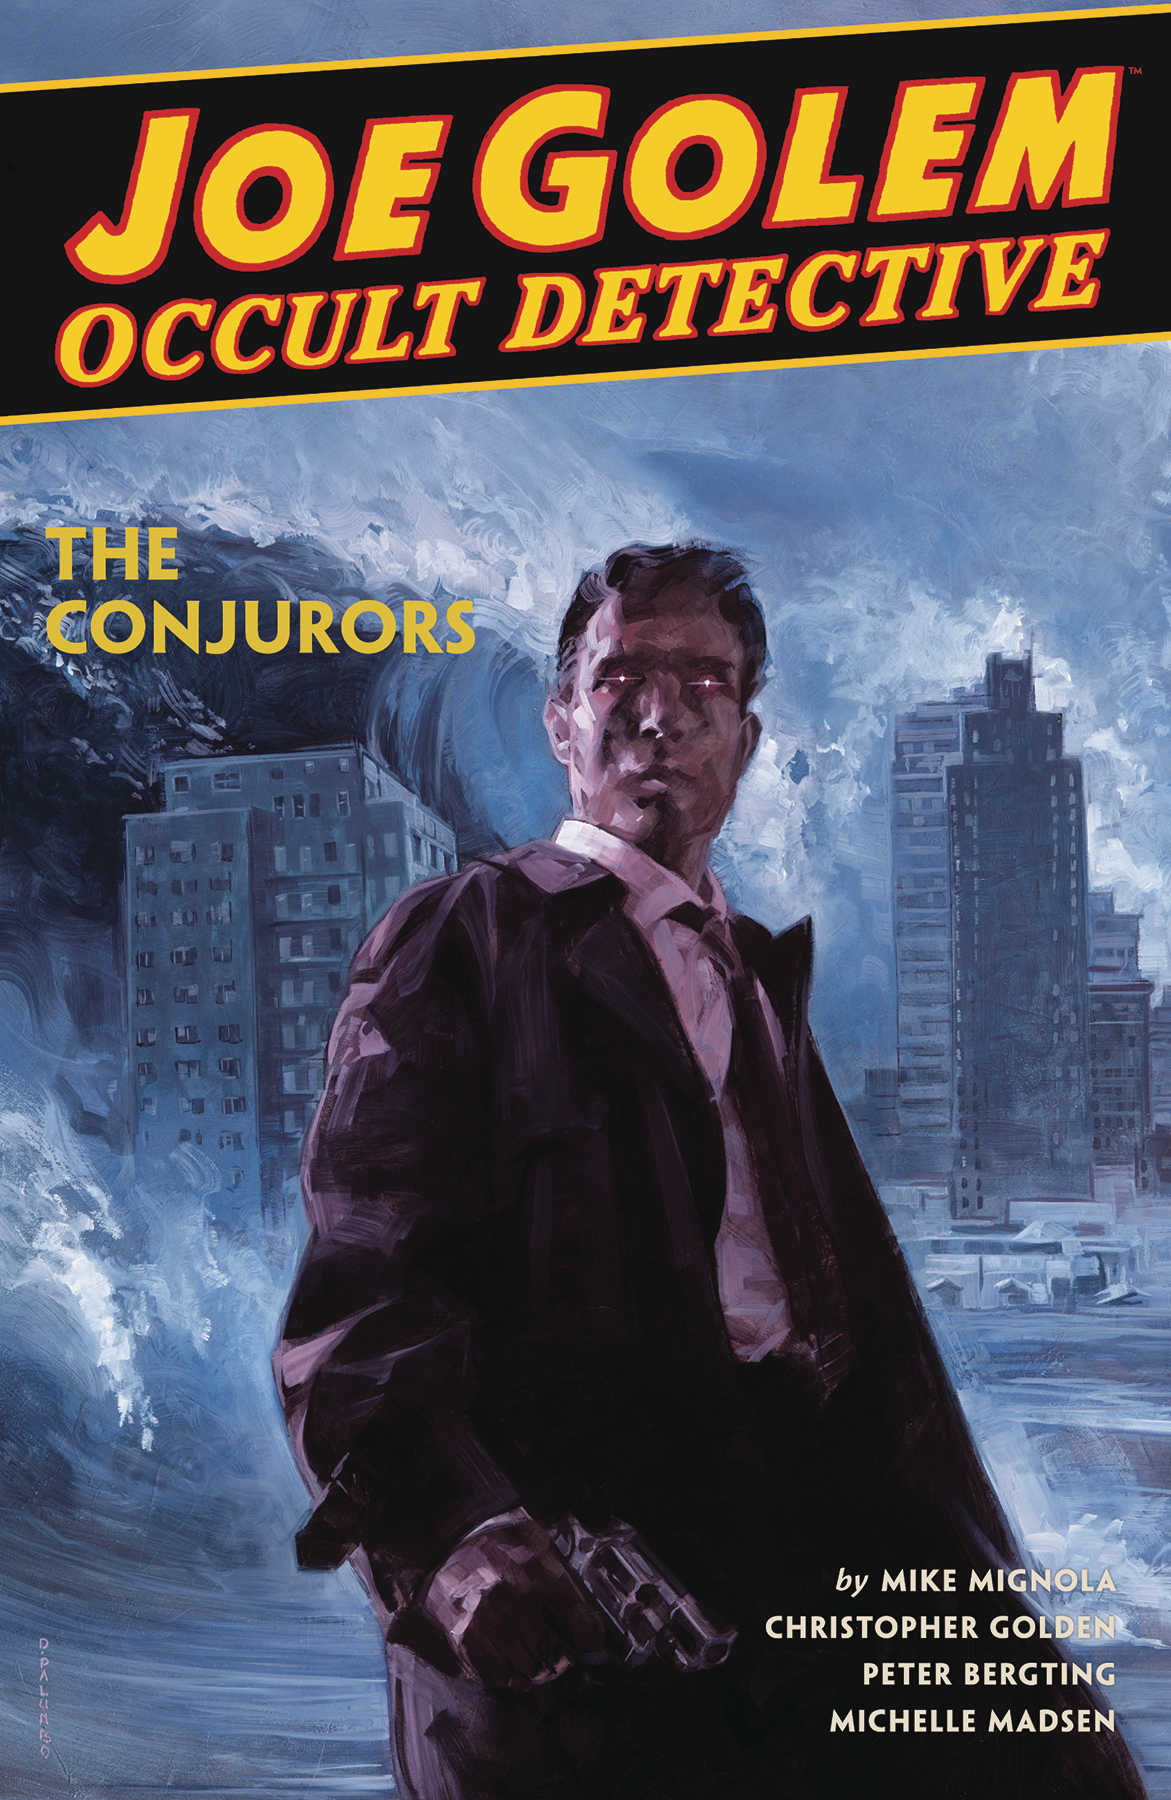 Joe Golem Occult Detective Hardcover Volume 4